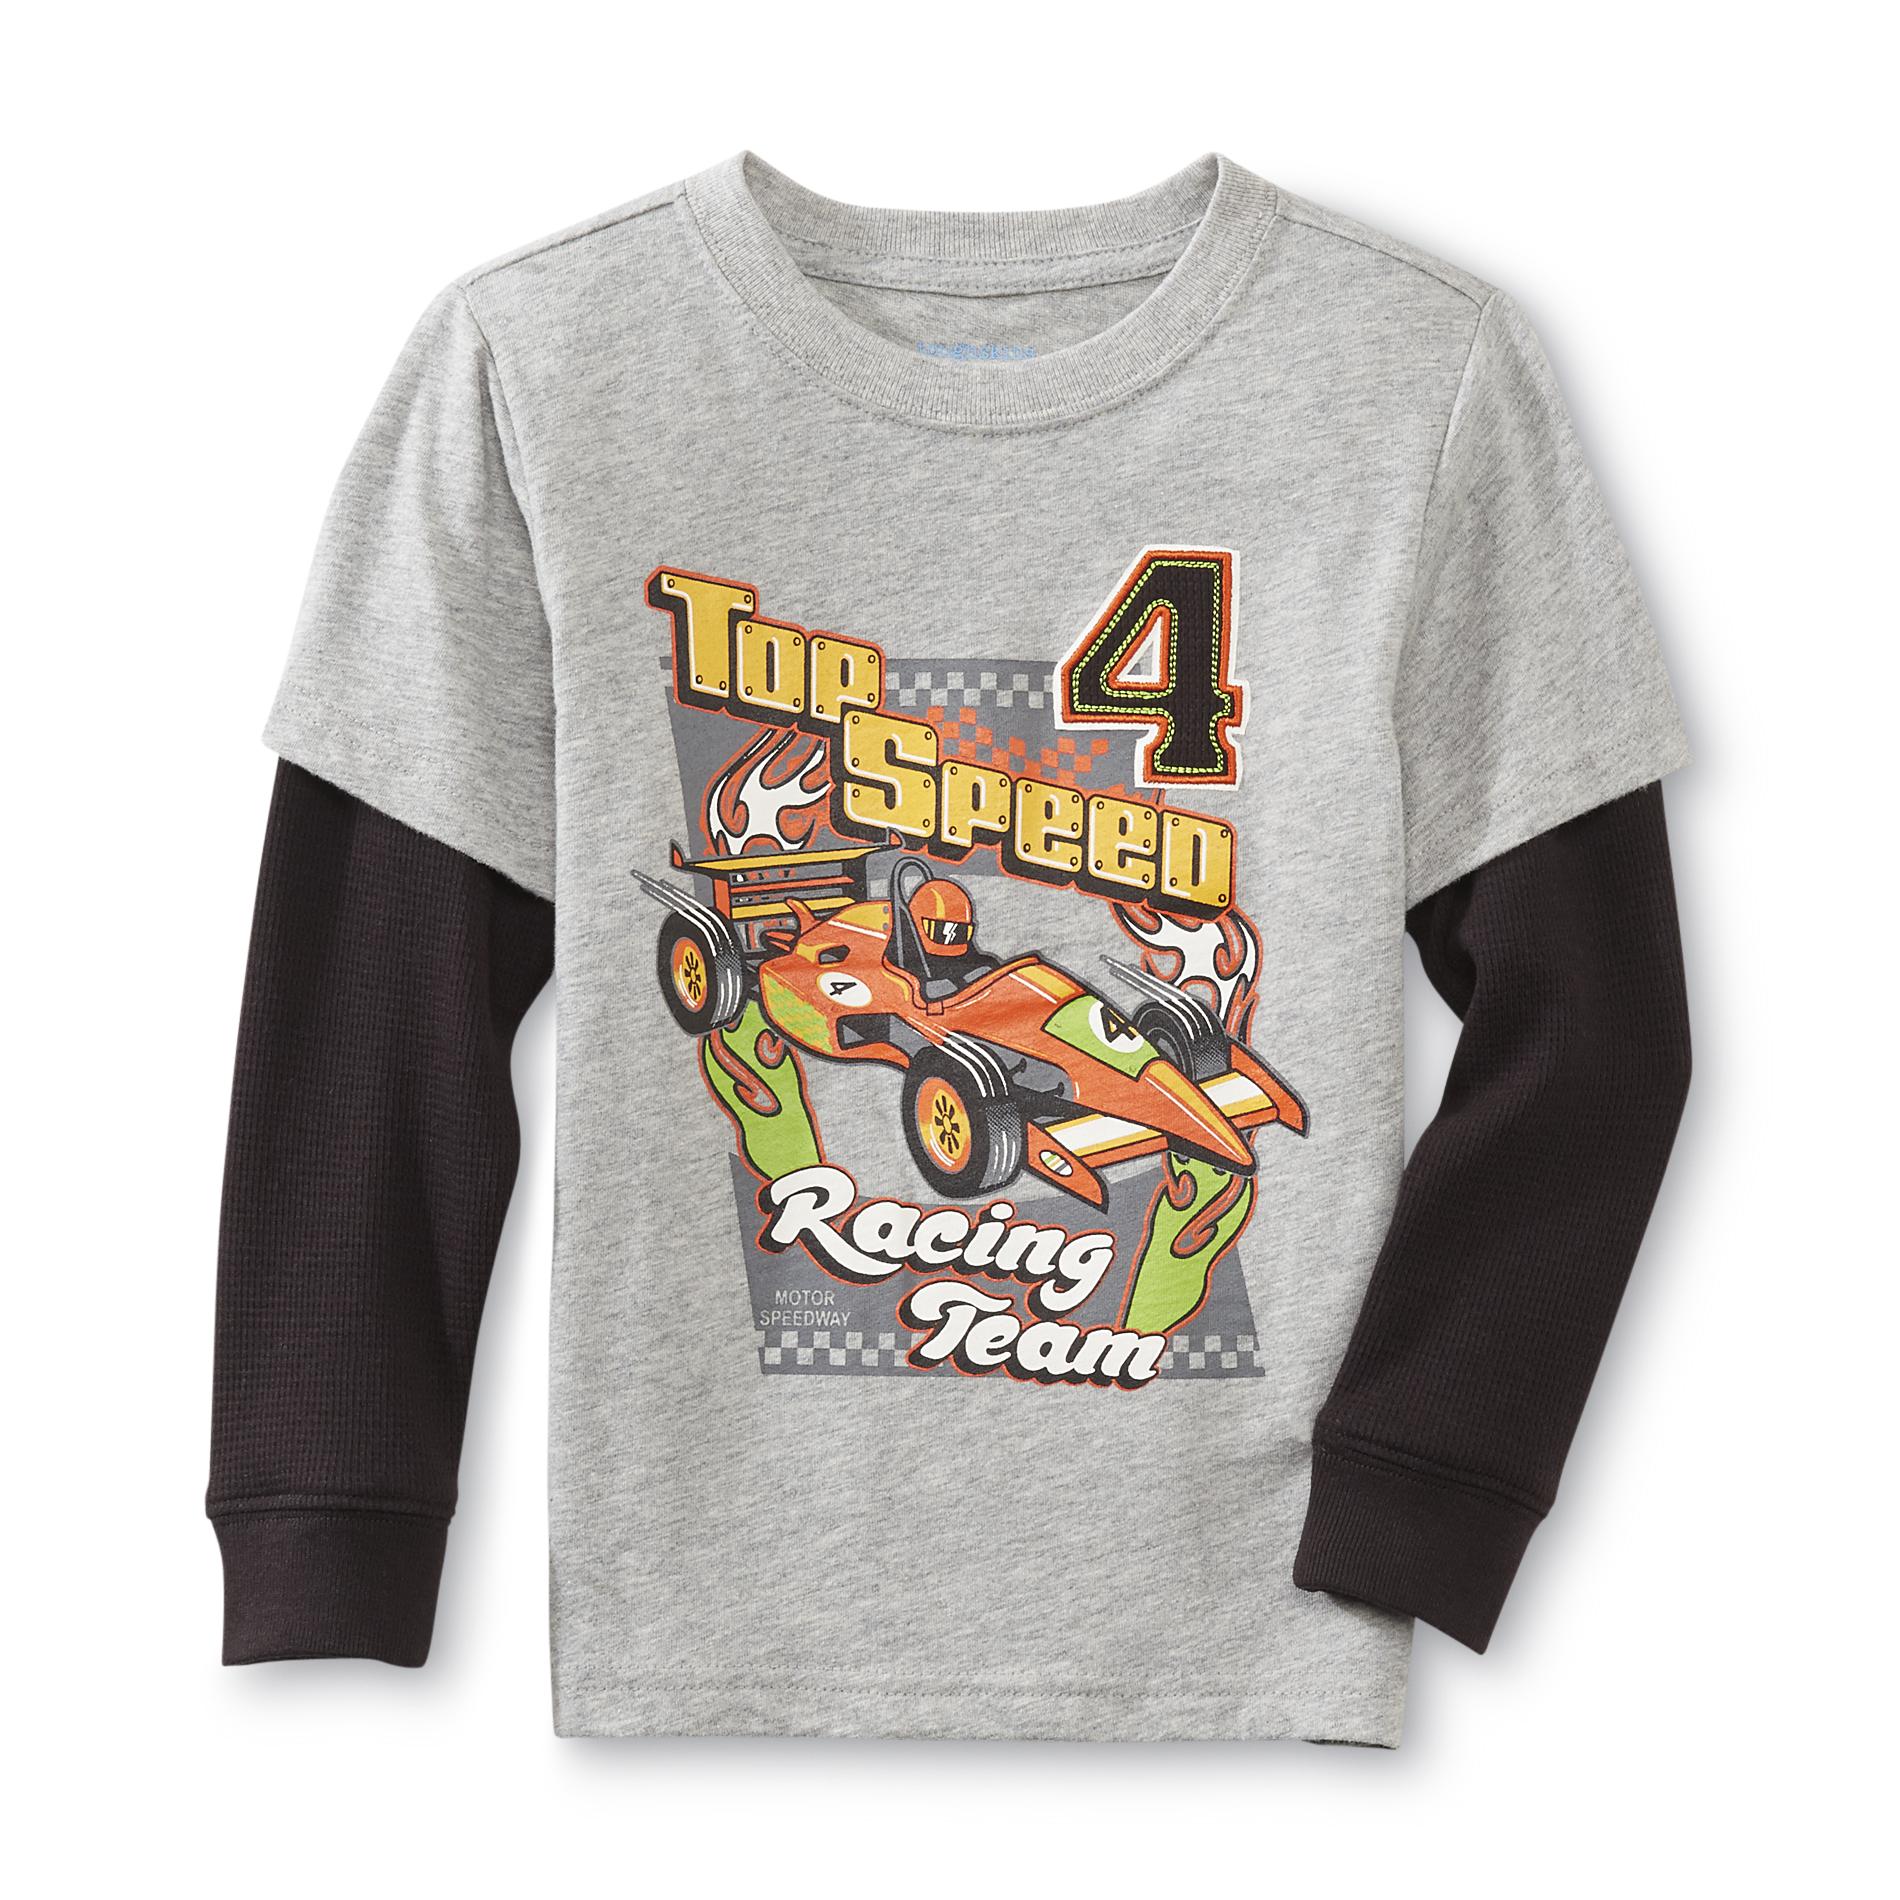 Toughskins Infant & Toddler Boy's Graphic T-Shirt - Race Car